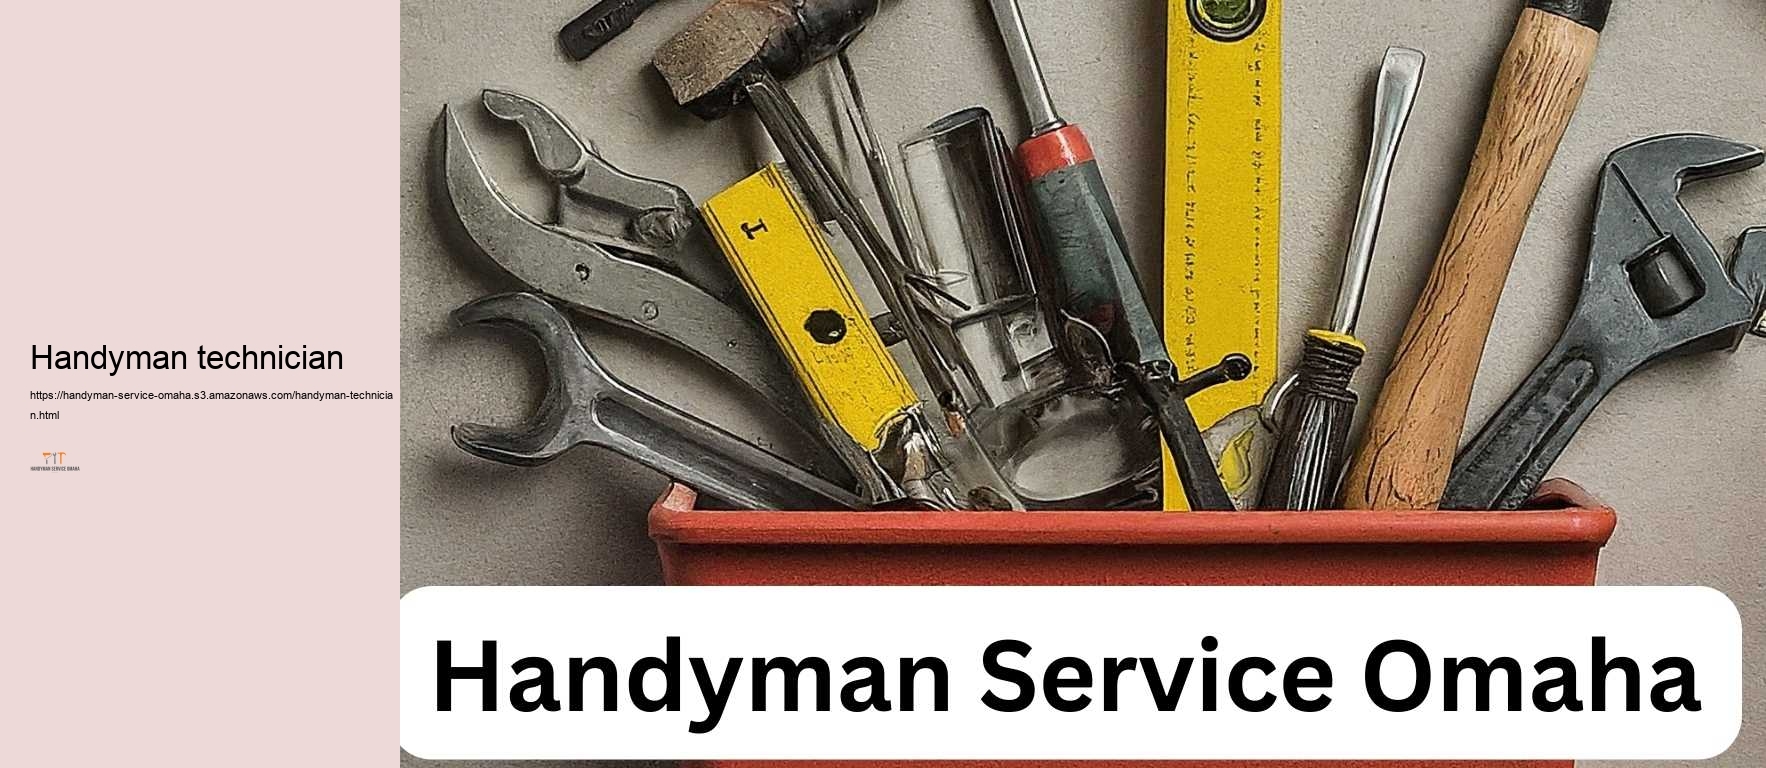 Handyman technician